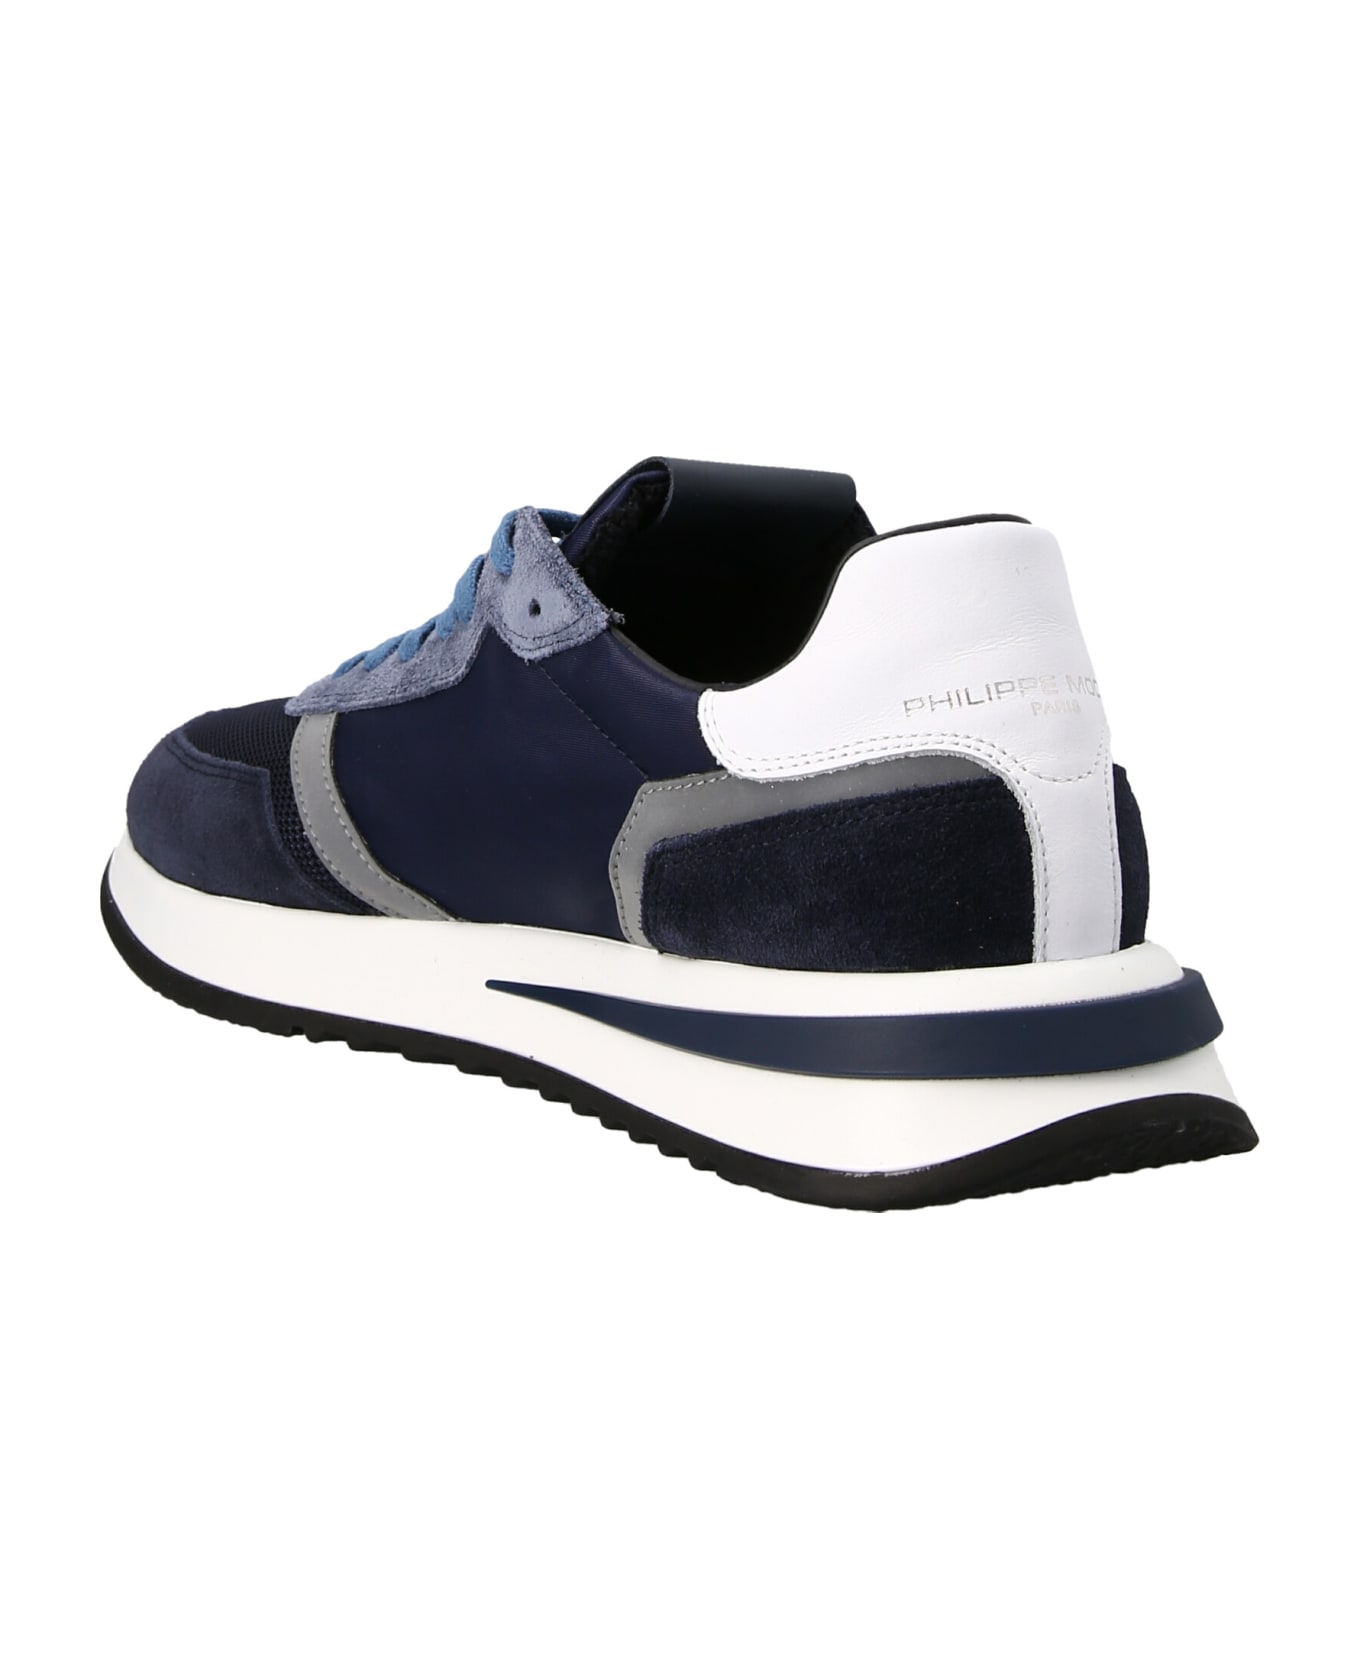 Philippe Model ''pmyo 2.1' Sneakers - Blue